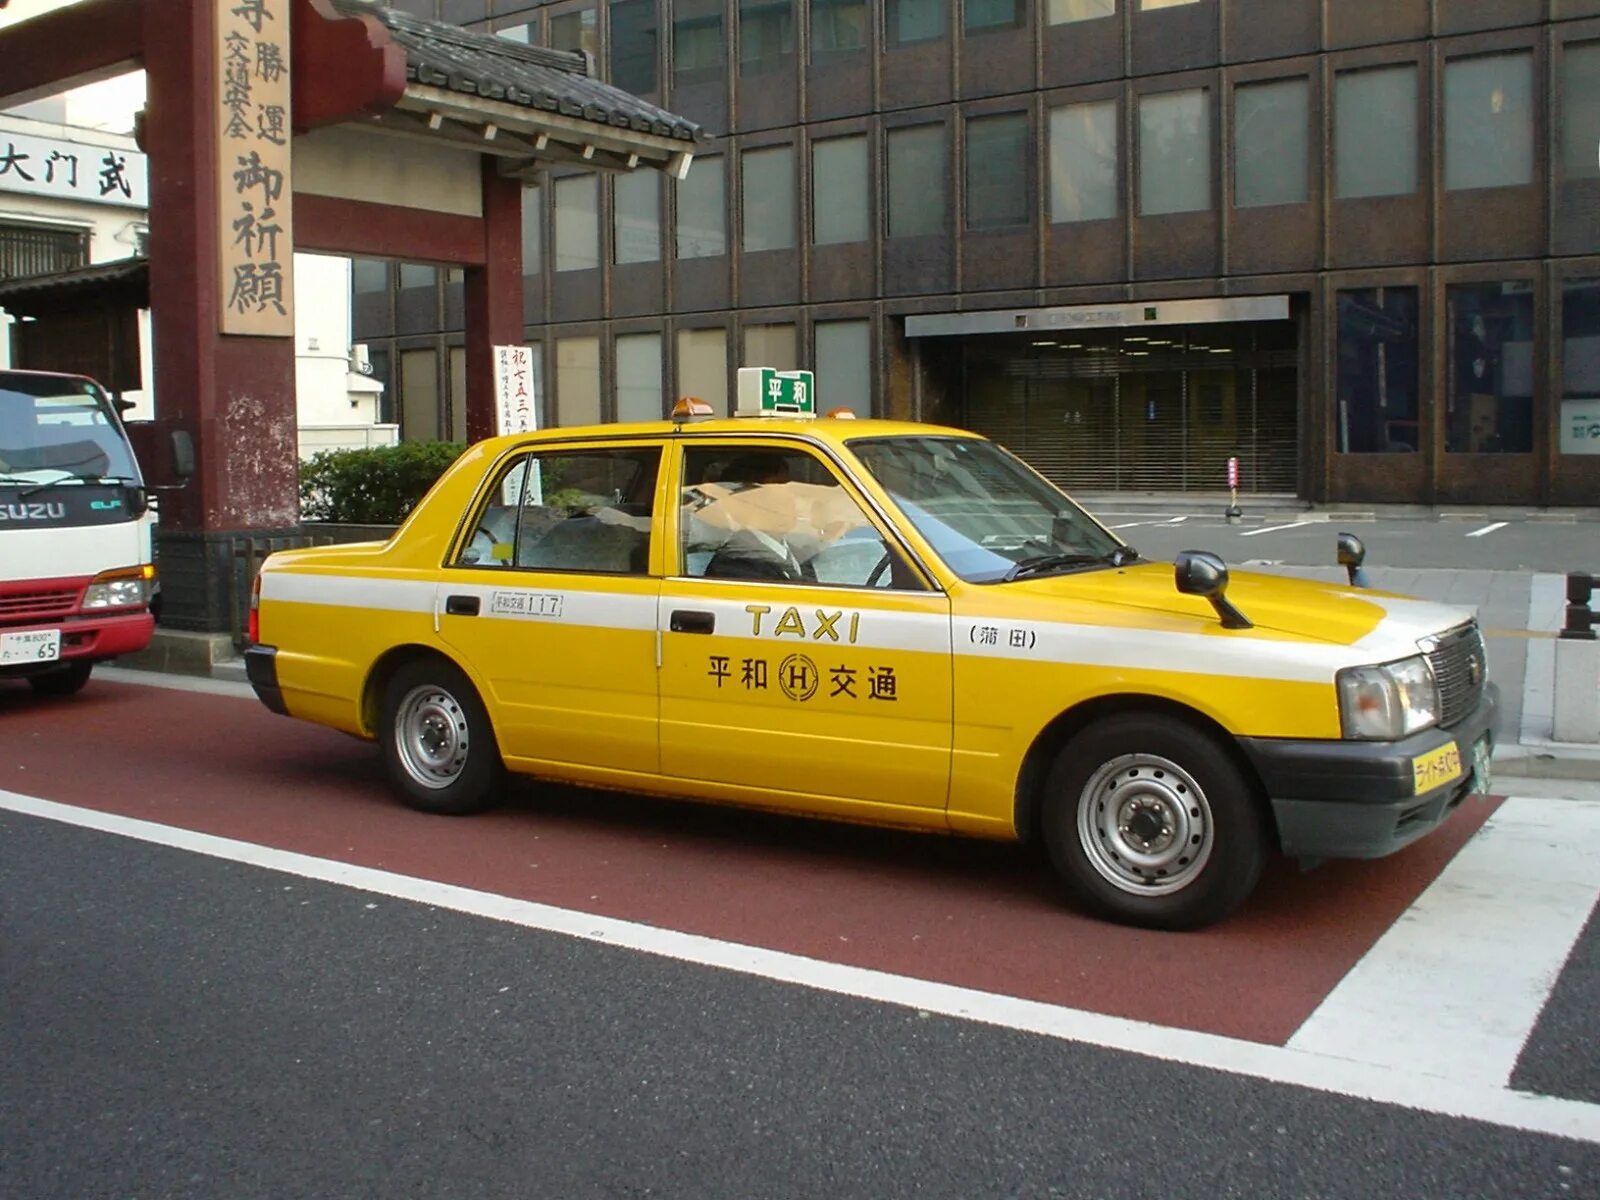 Toyota Taxi 1990. Японское такси Тойота Краун. Toyota JPN Taxi 1990. Краун такси в Японии.